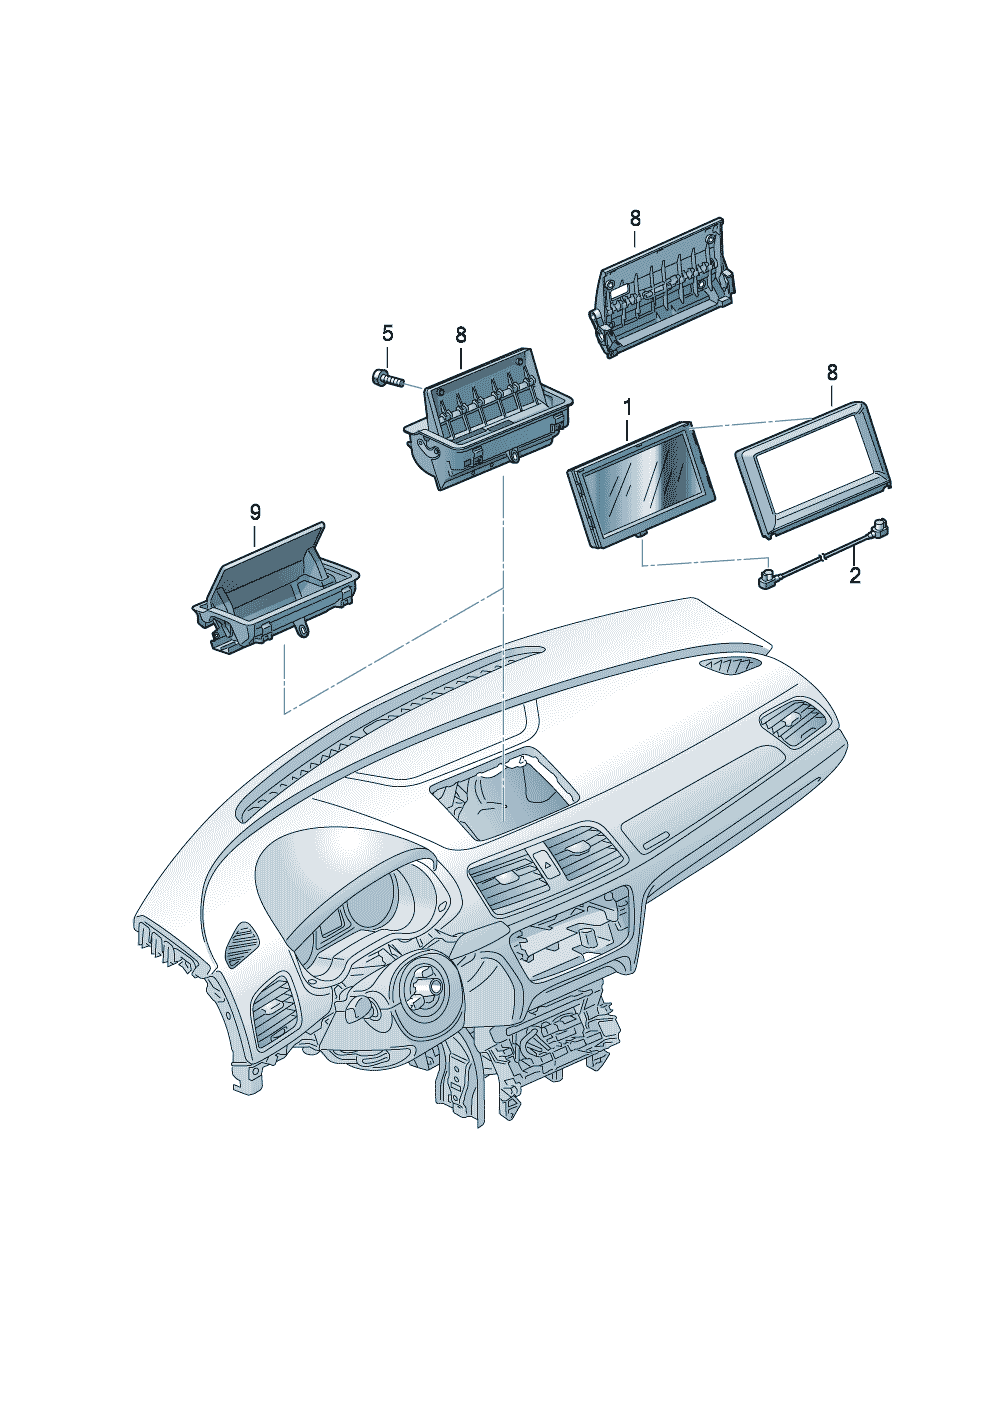 Дисплейдля мультимед.интерфейса MMIи                   для маг-лы:  RMC - Audi RSQ3/Sportback - rsq3